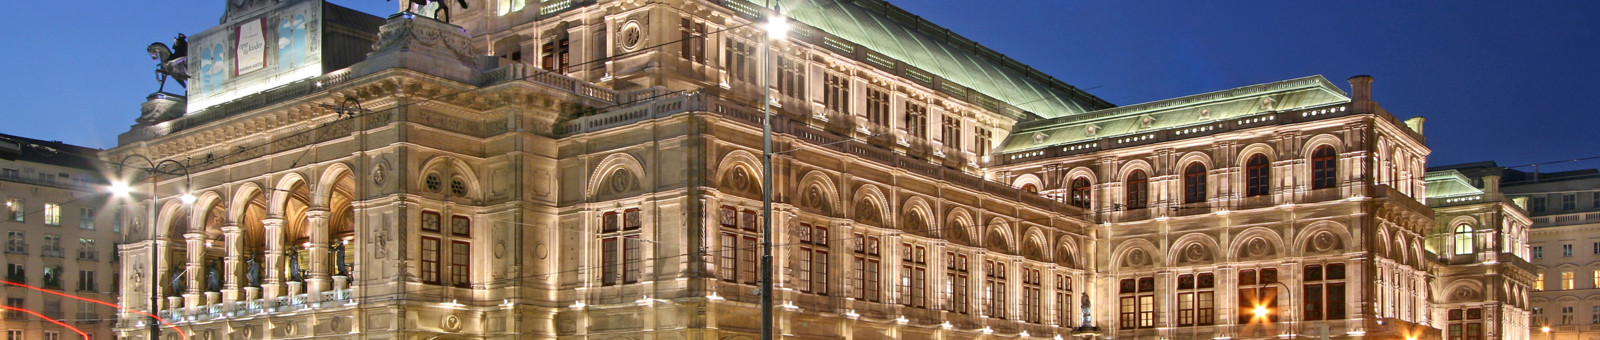     Opéra nationale de Vienne / Vienna, Austria